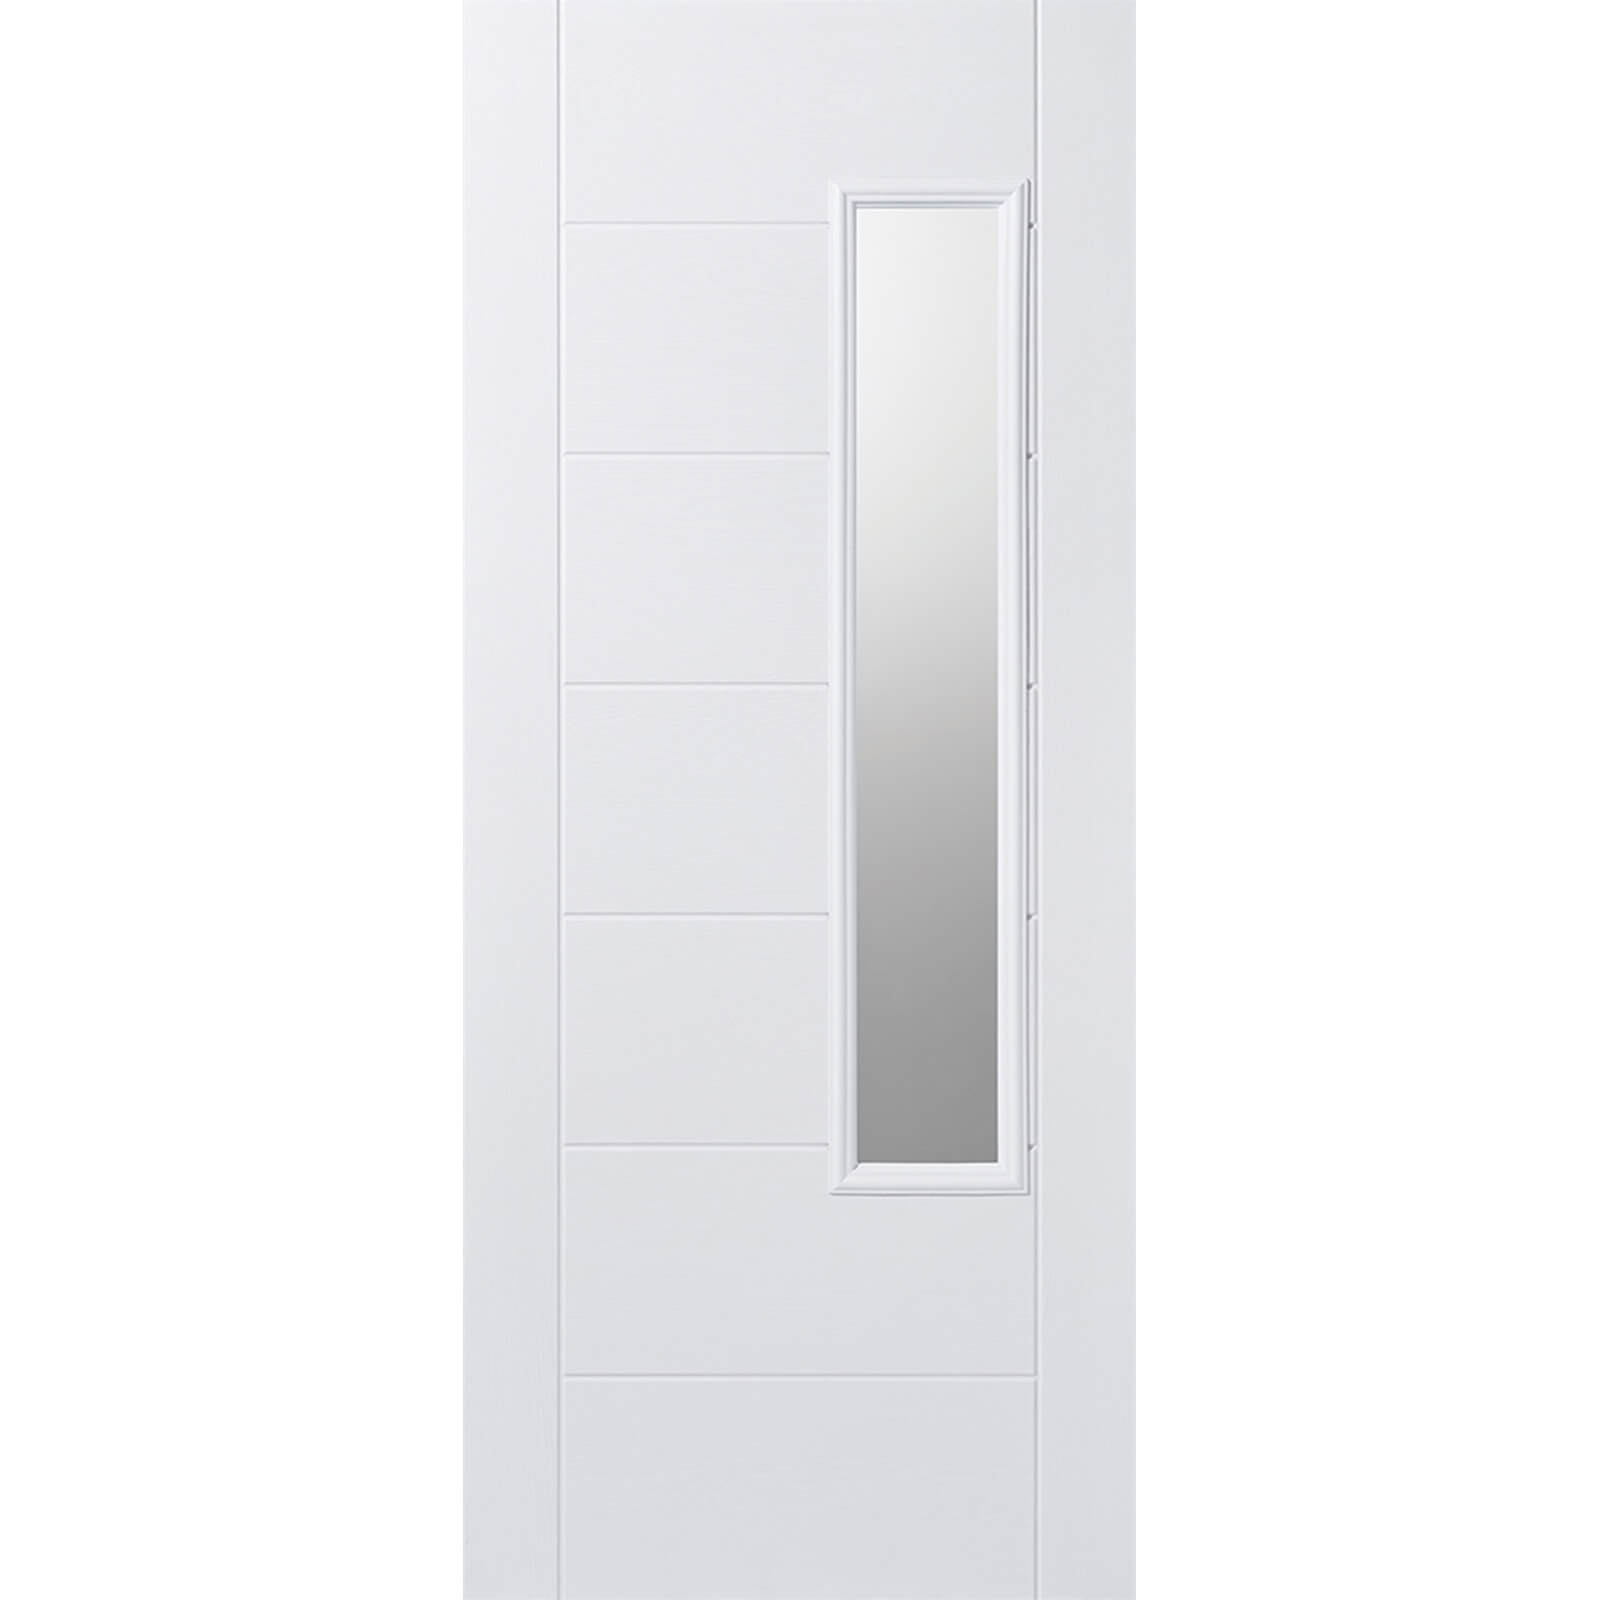 Newbury External Glazed White GRP 1 Lite Door - 813 x 2032mm